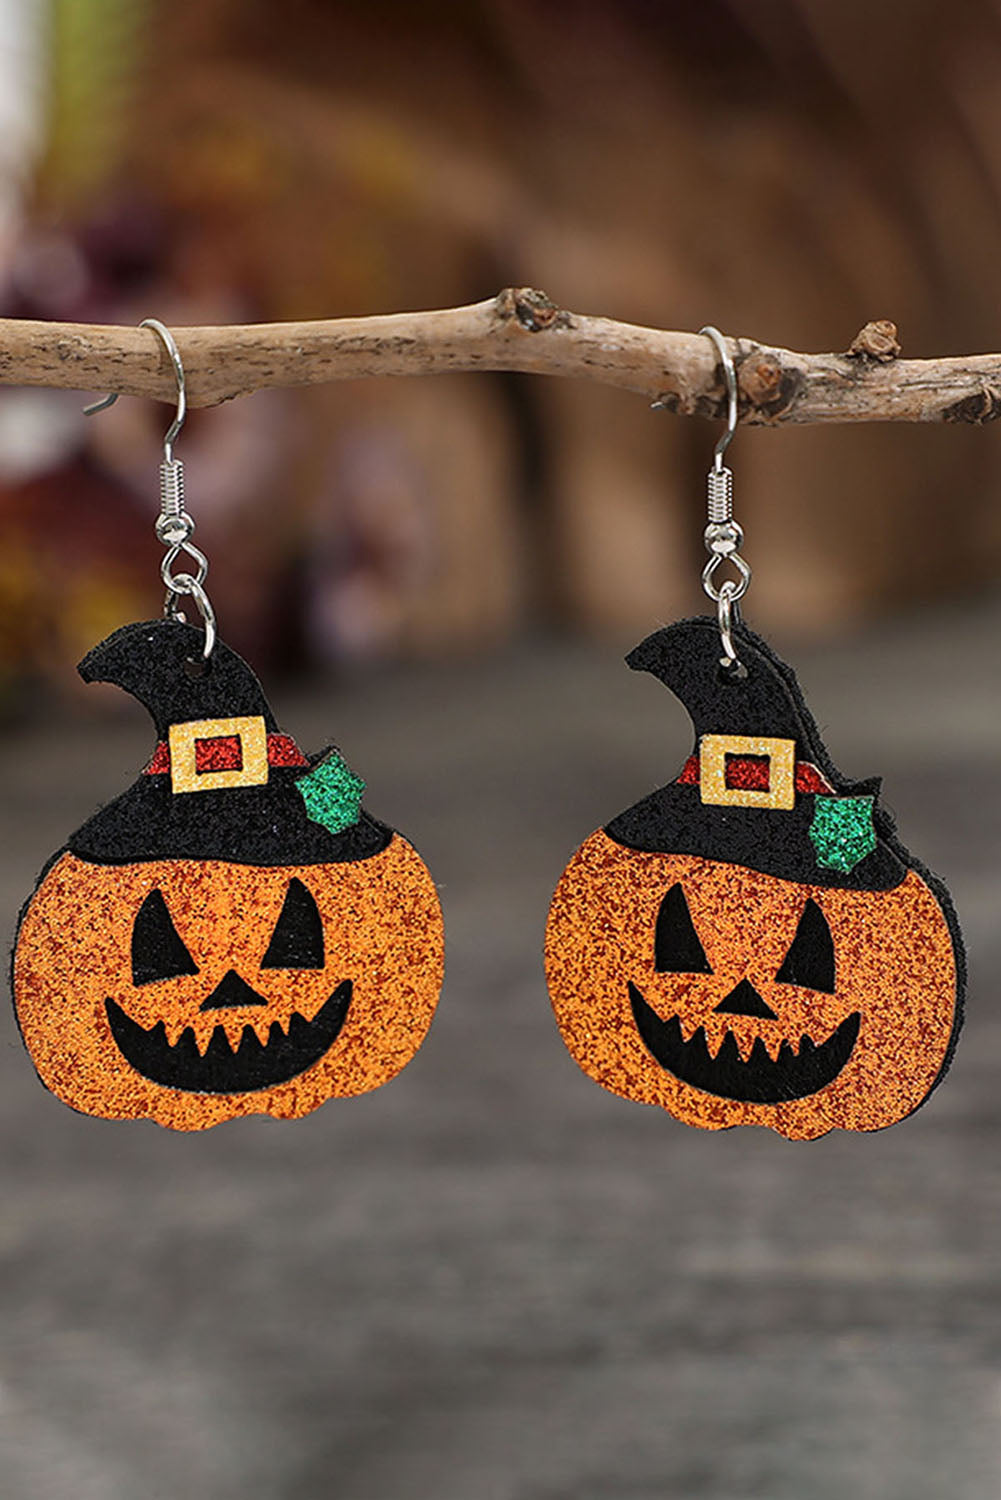 Gold Flame Halloween Pumpkin Dangle Earrings